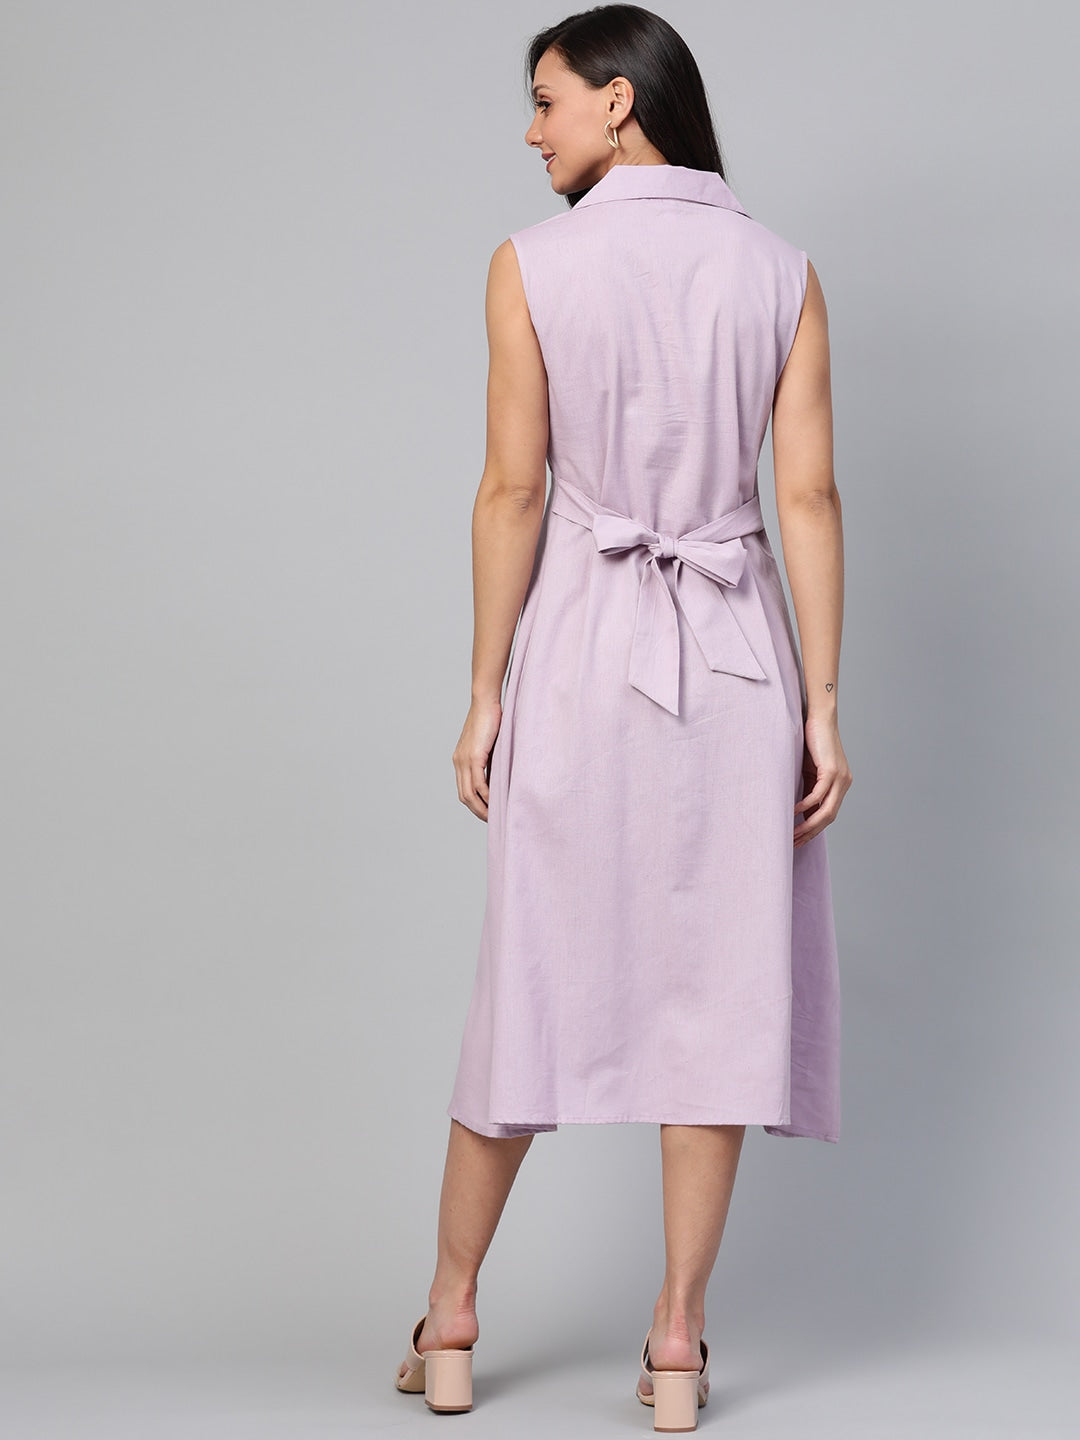 Lavender Solid Dress-Yufta Store-7459DRSLVSS